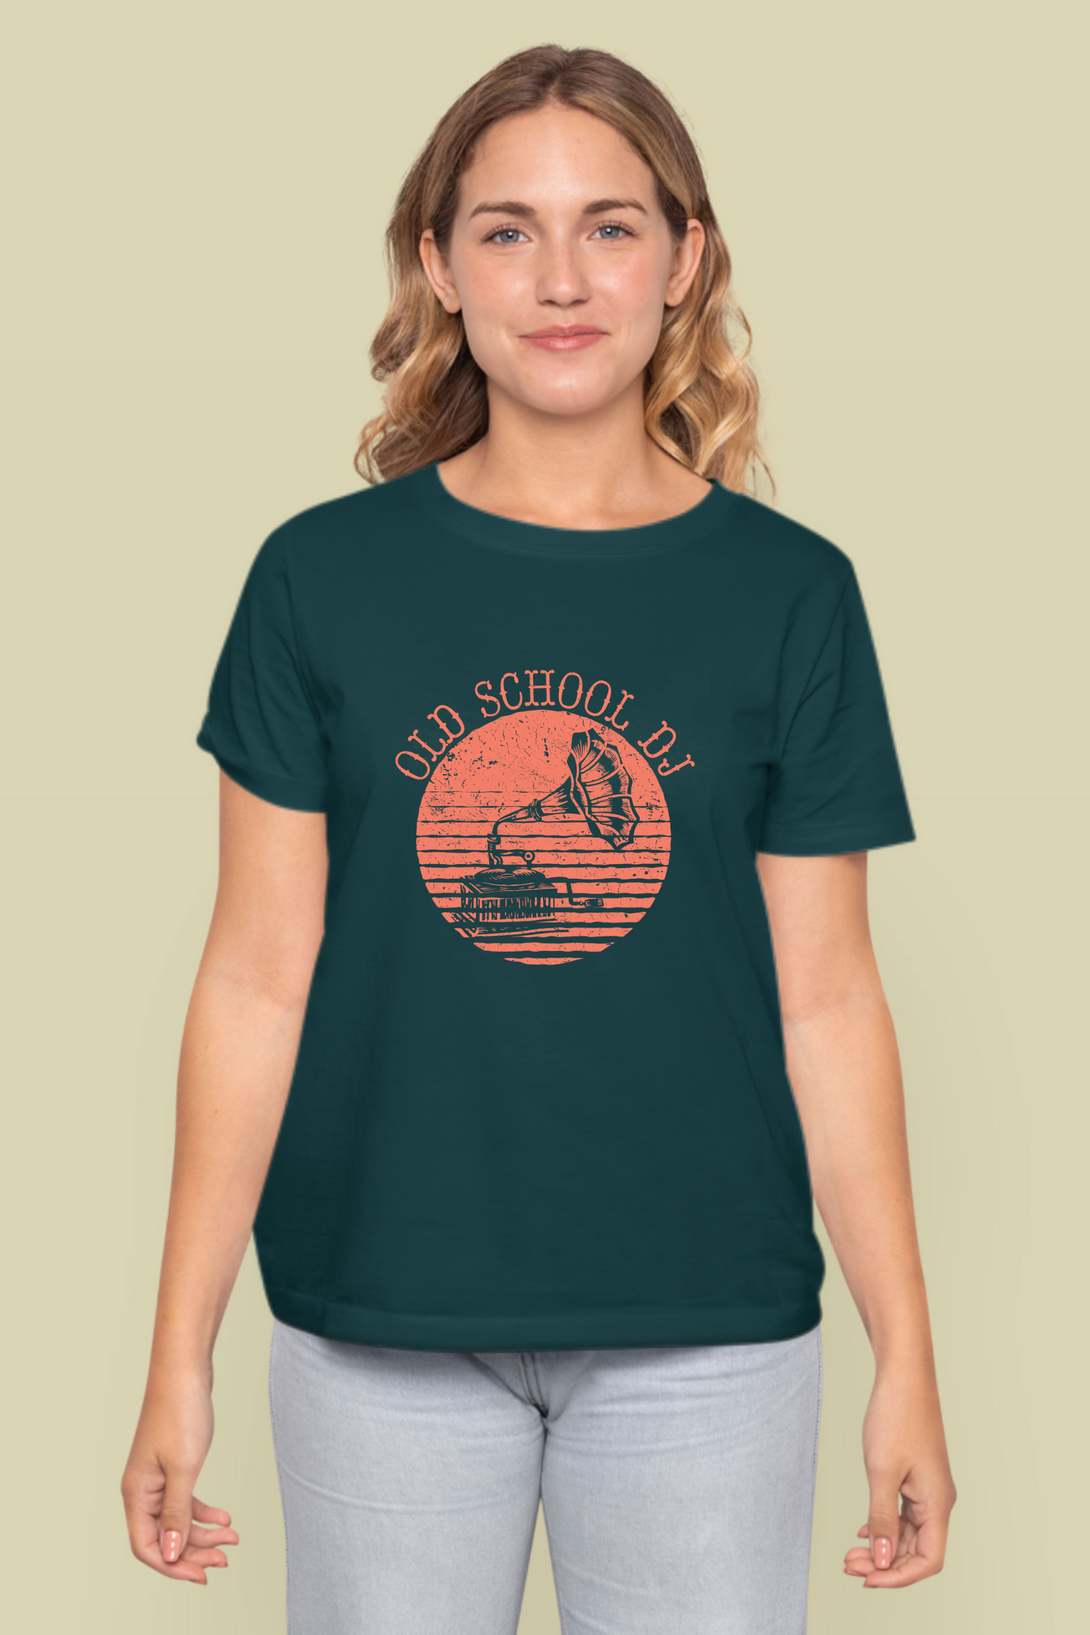 Old School Dj Printed T-Shirt For Women - WowWaves - 9